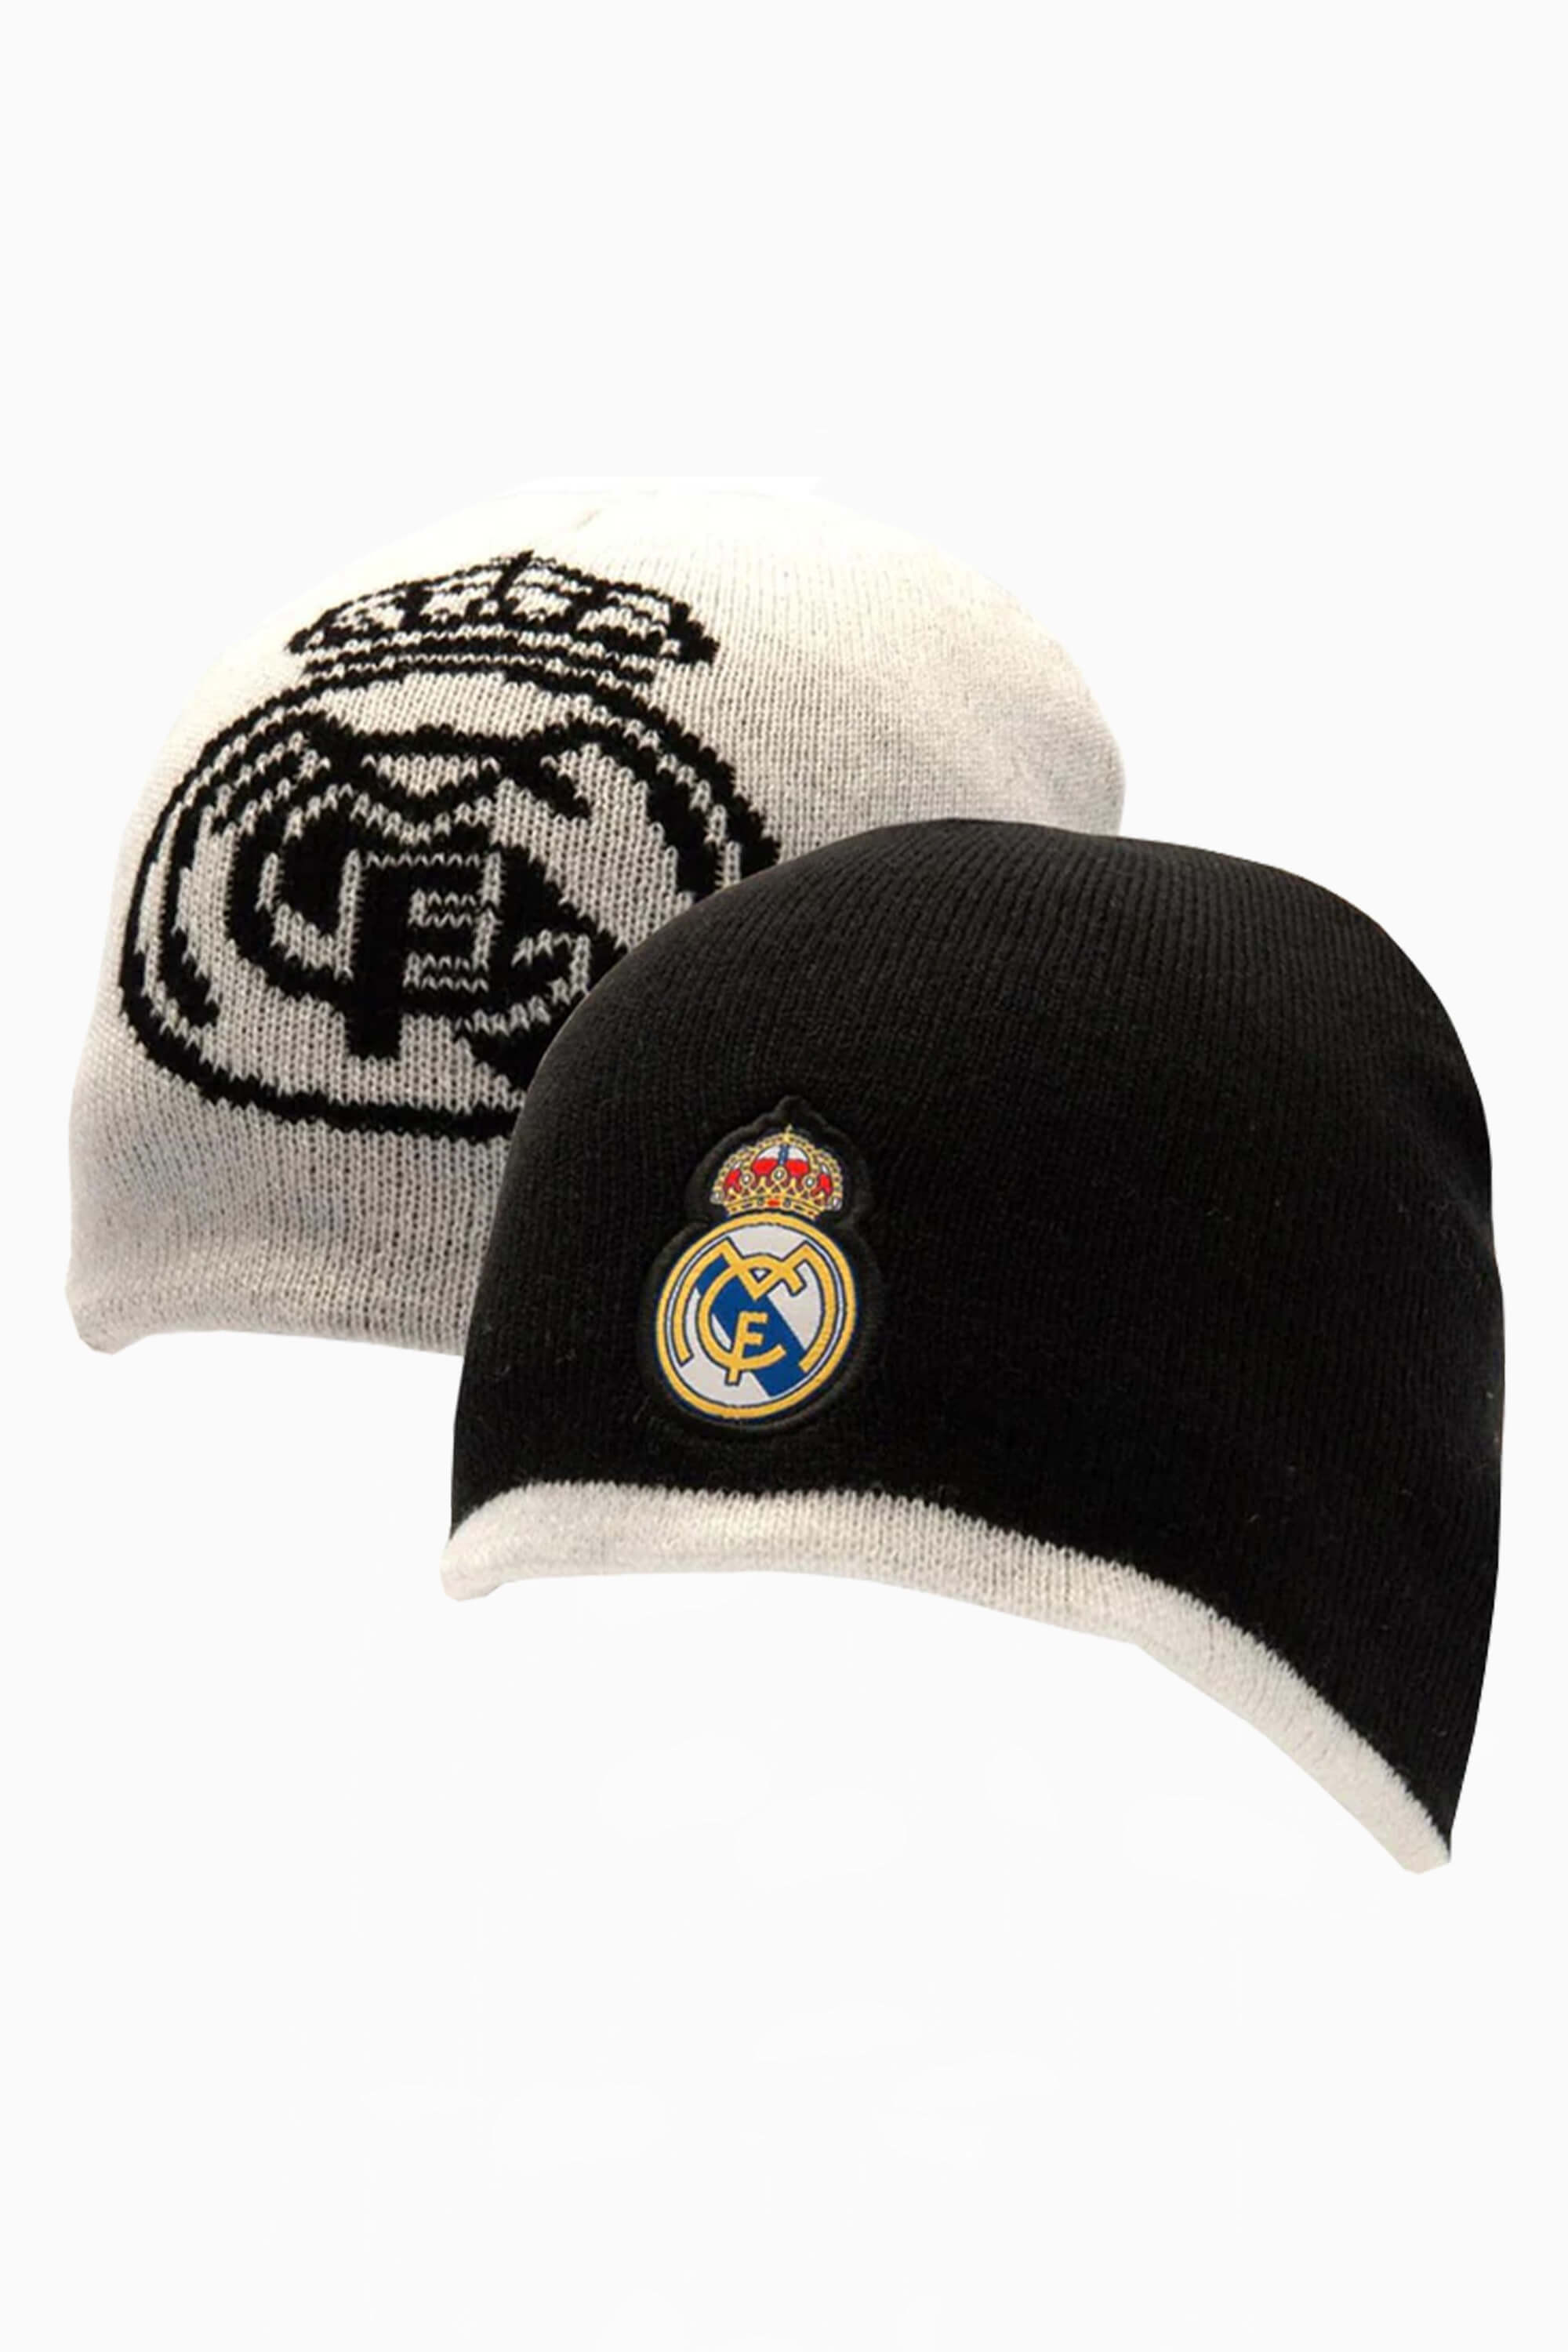 Gorra Real Madrid - Orgullo Costeño